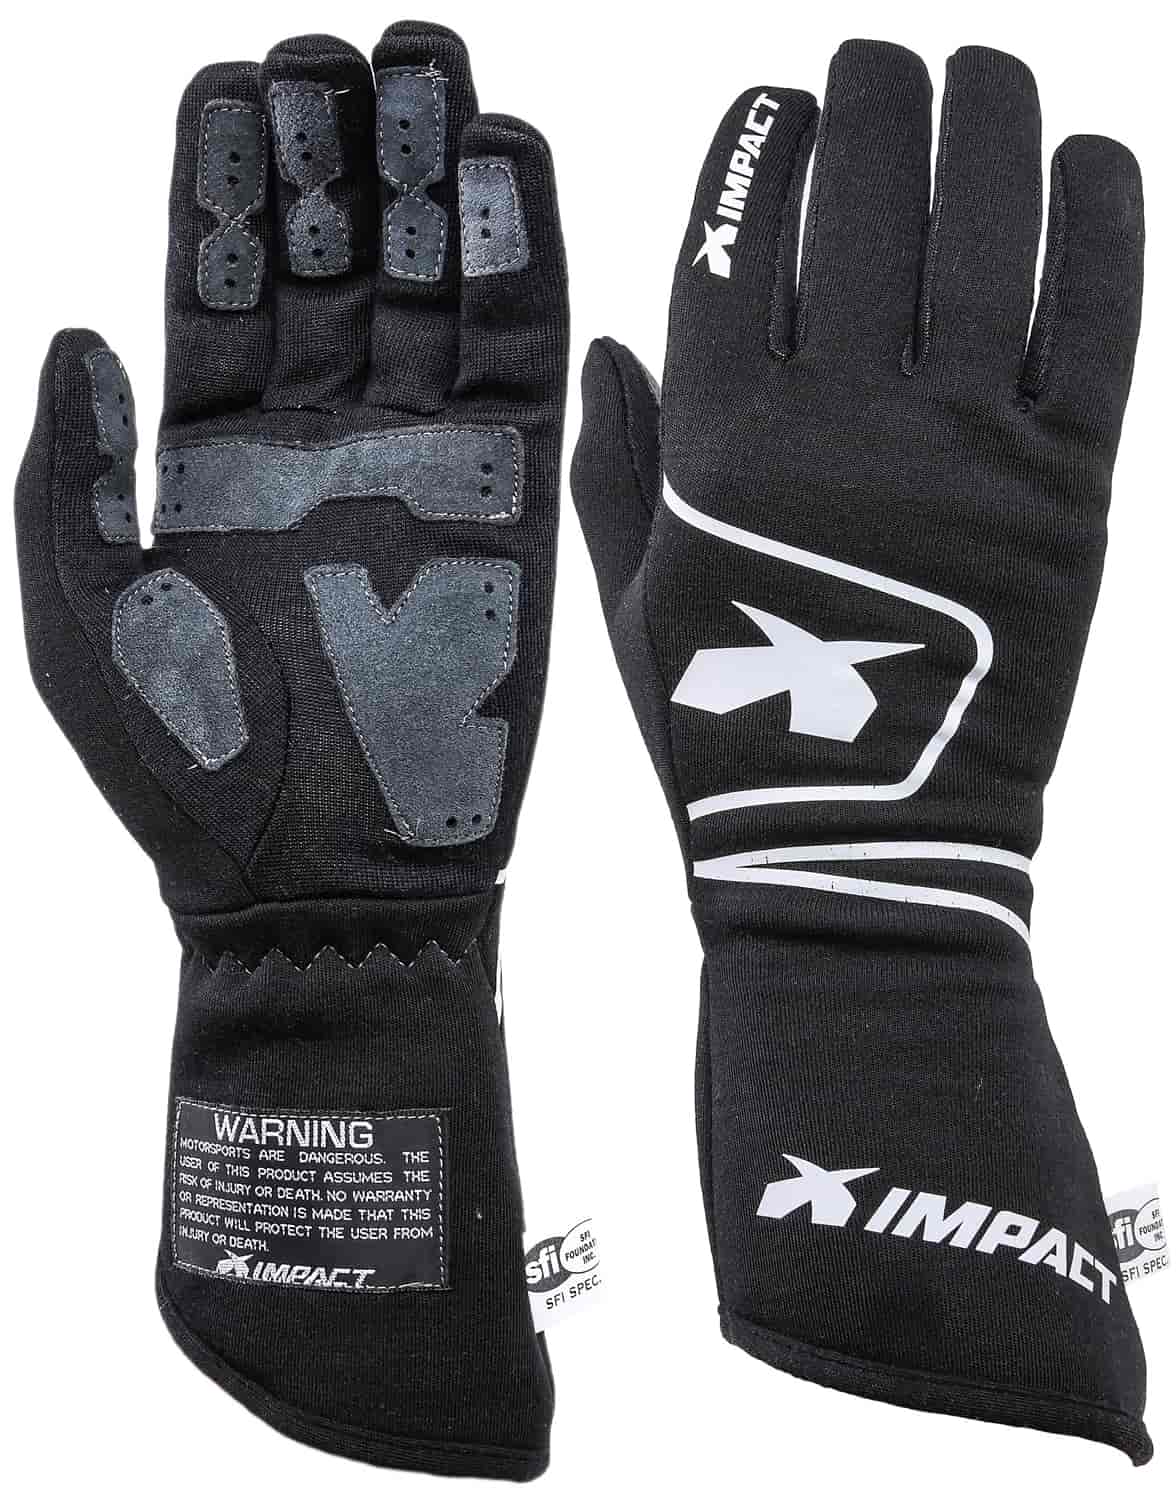 G6 Driving Gloves Small Black SFI-5